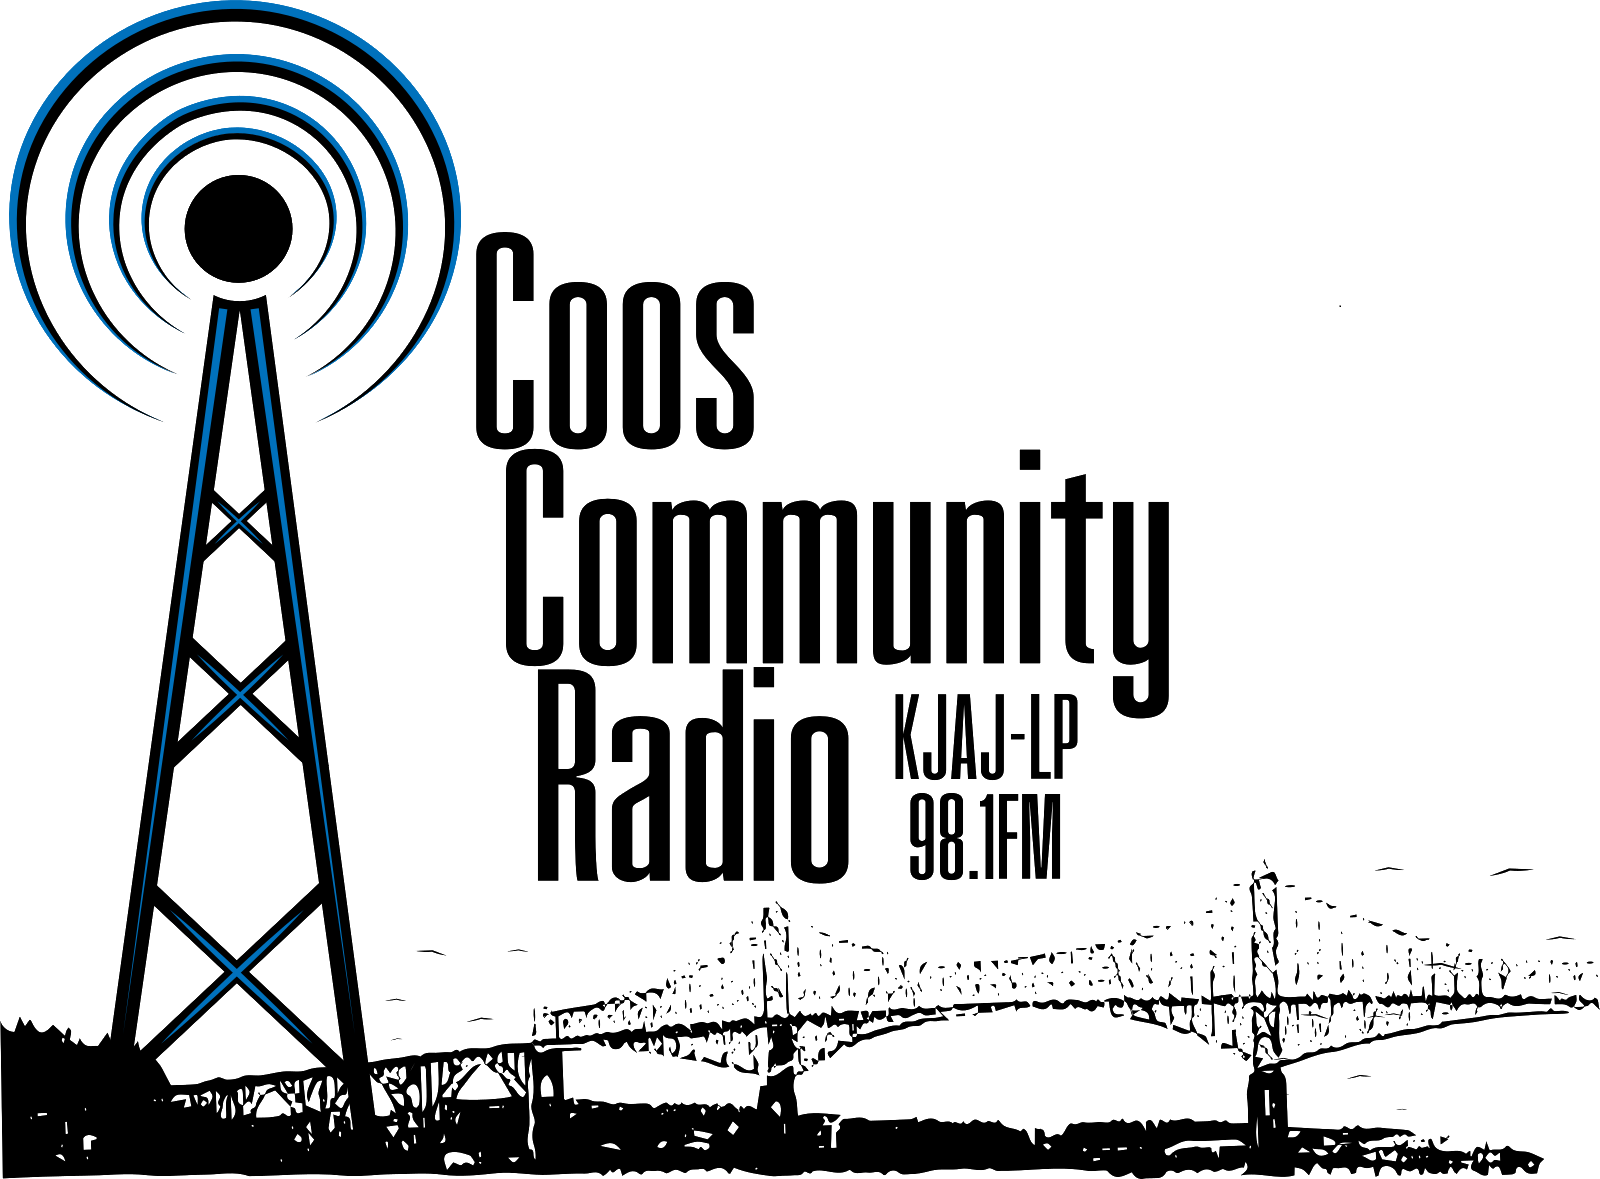 Coos Community Radio KJAJ-LP 98.1FM